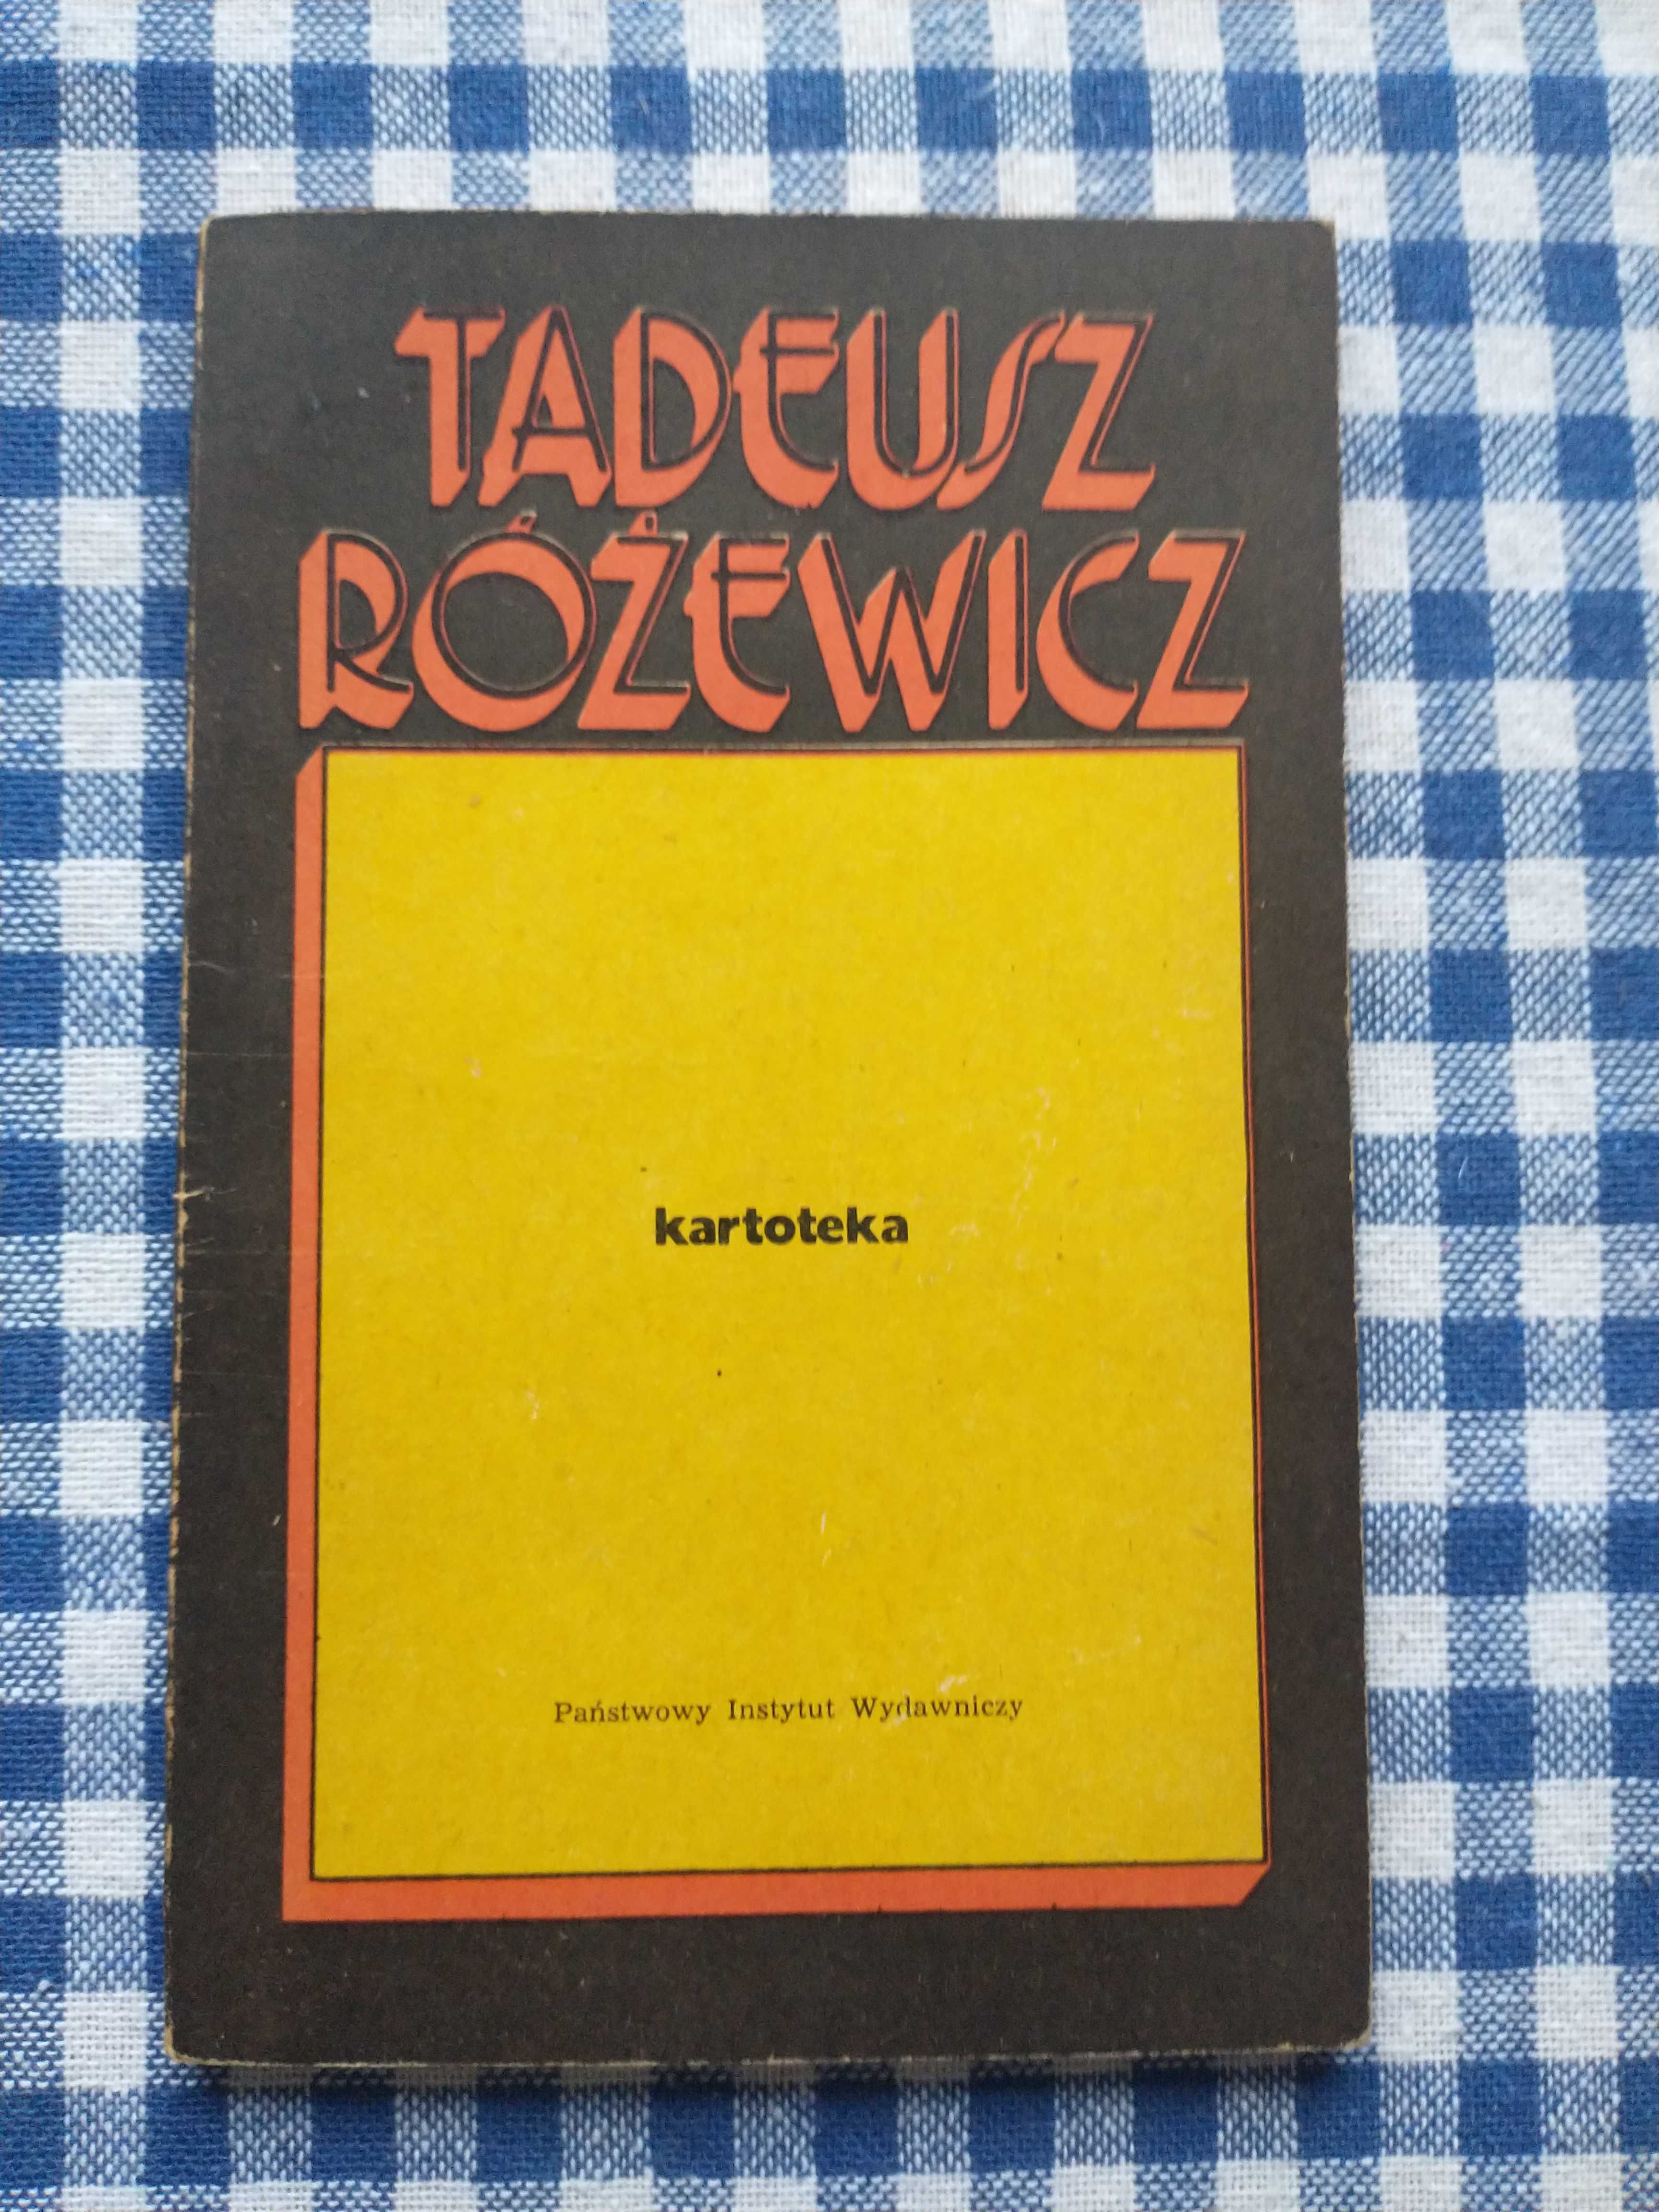 "Kartoteka" Tadeusz Różewicz